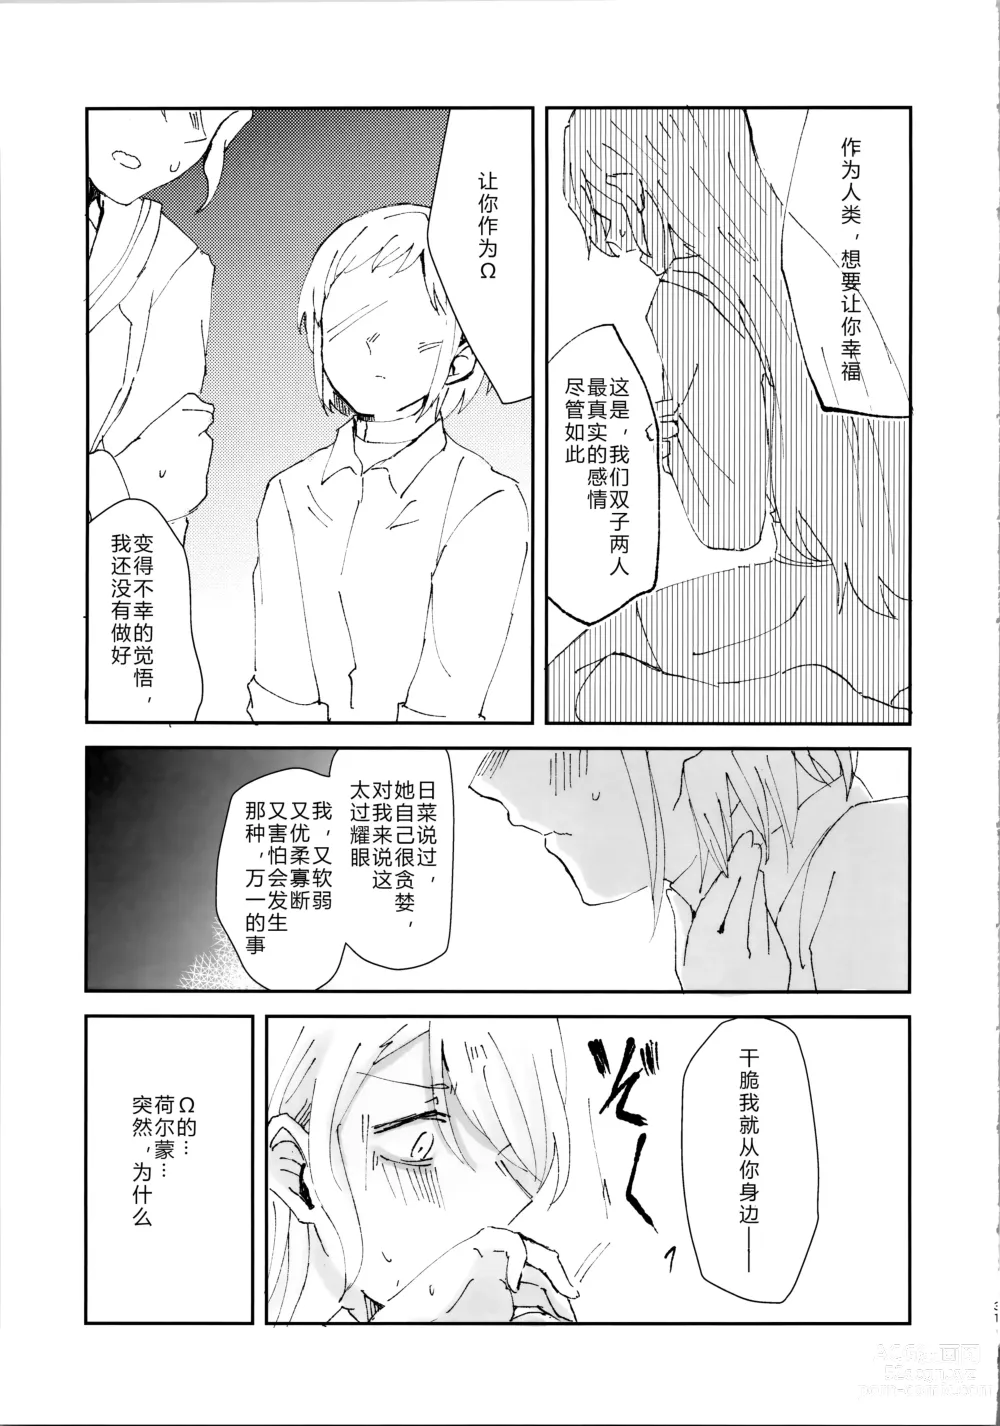 Page 31 of doujinshi 只要爱着彼此就好